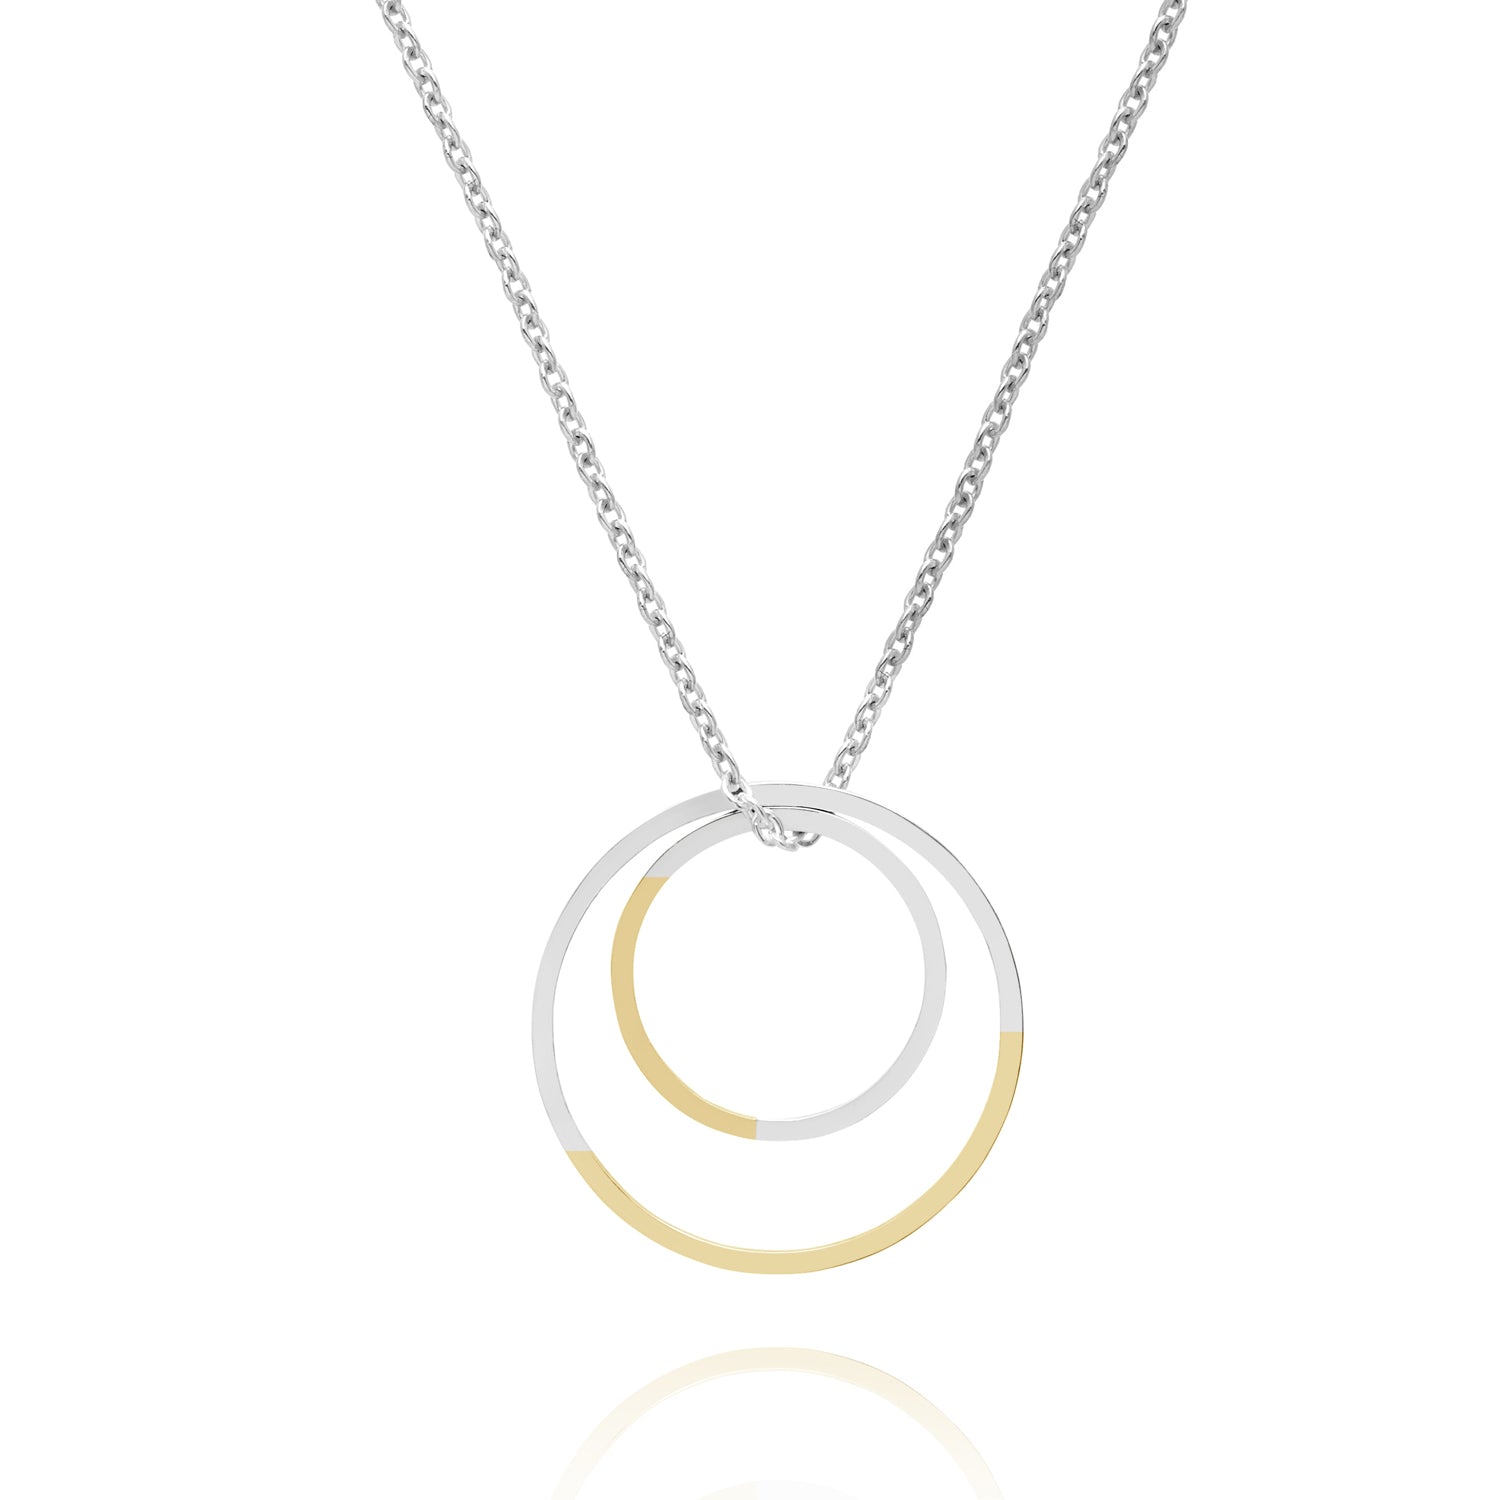 Golden Ratio Double Circle Necklace - 9k Yellow Gold & Silver